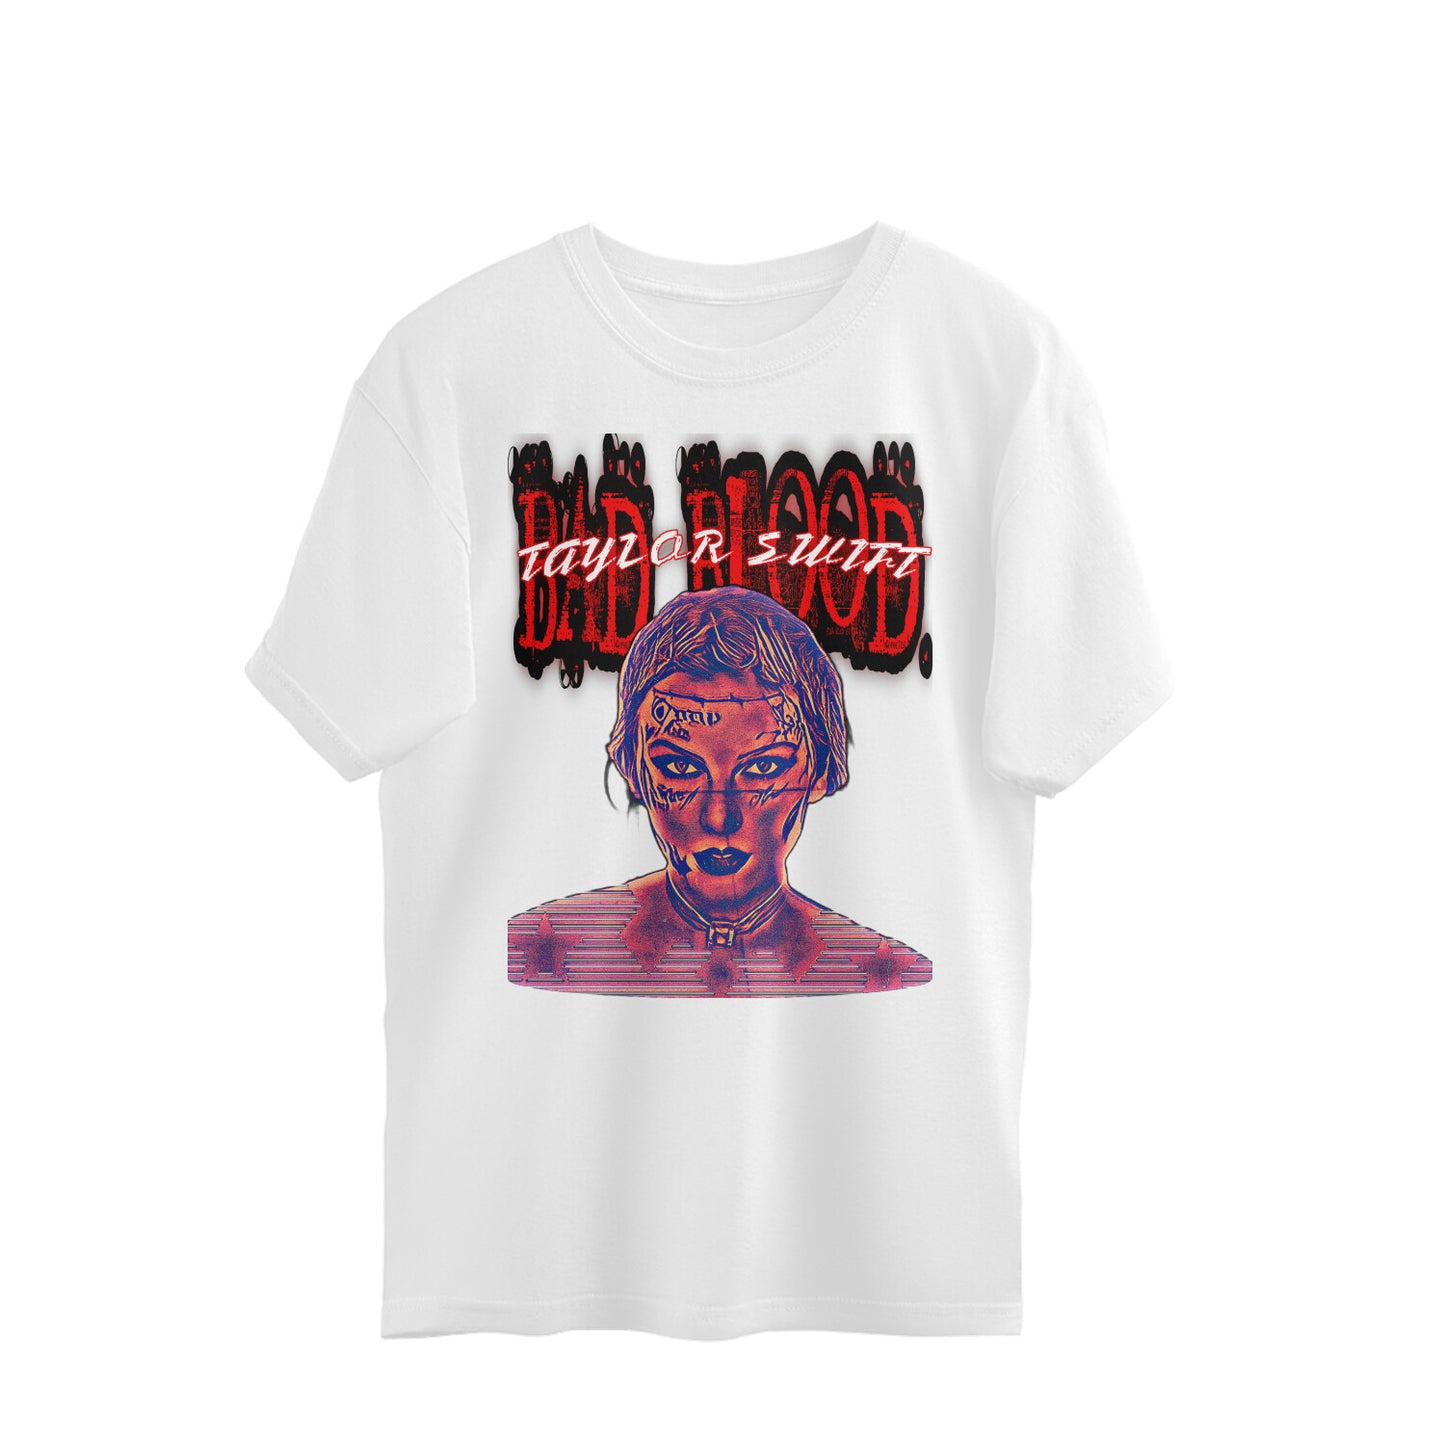 Taylor Swift - Bad Blood - Oversized T-shirt